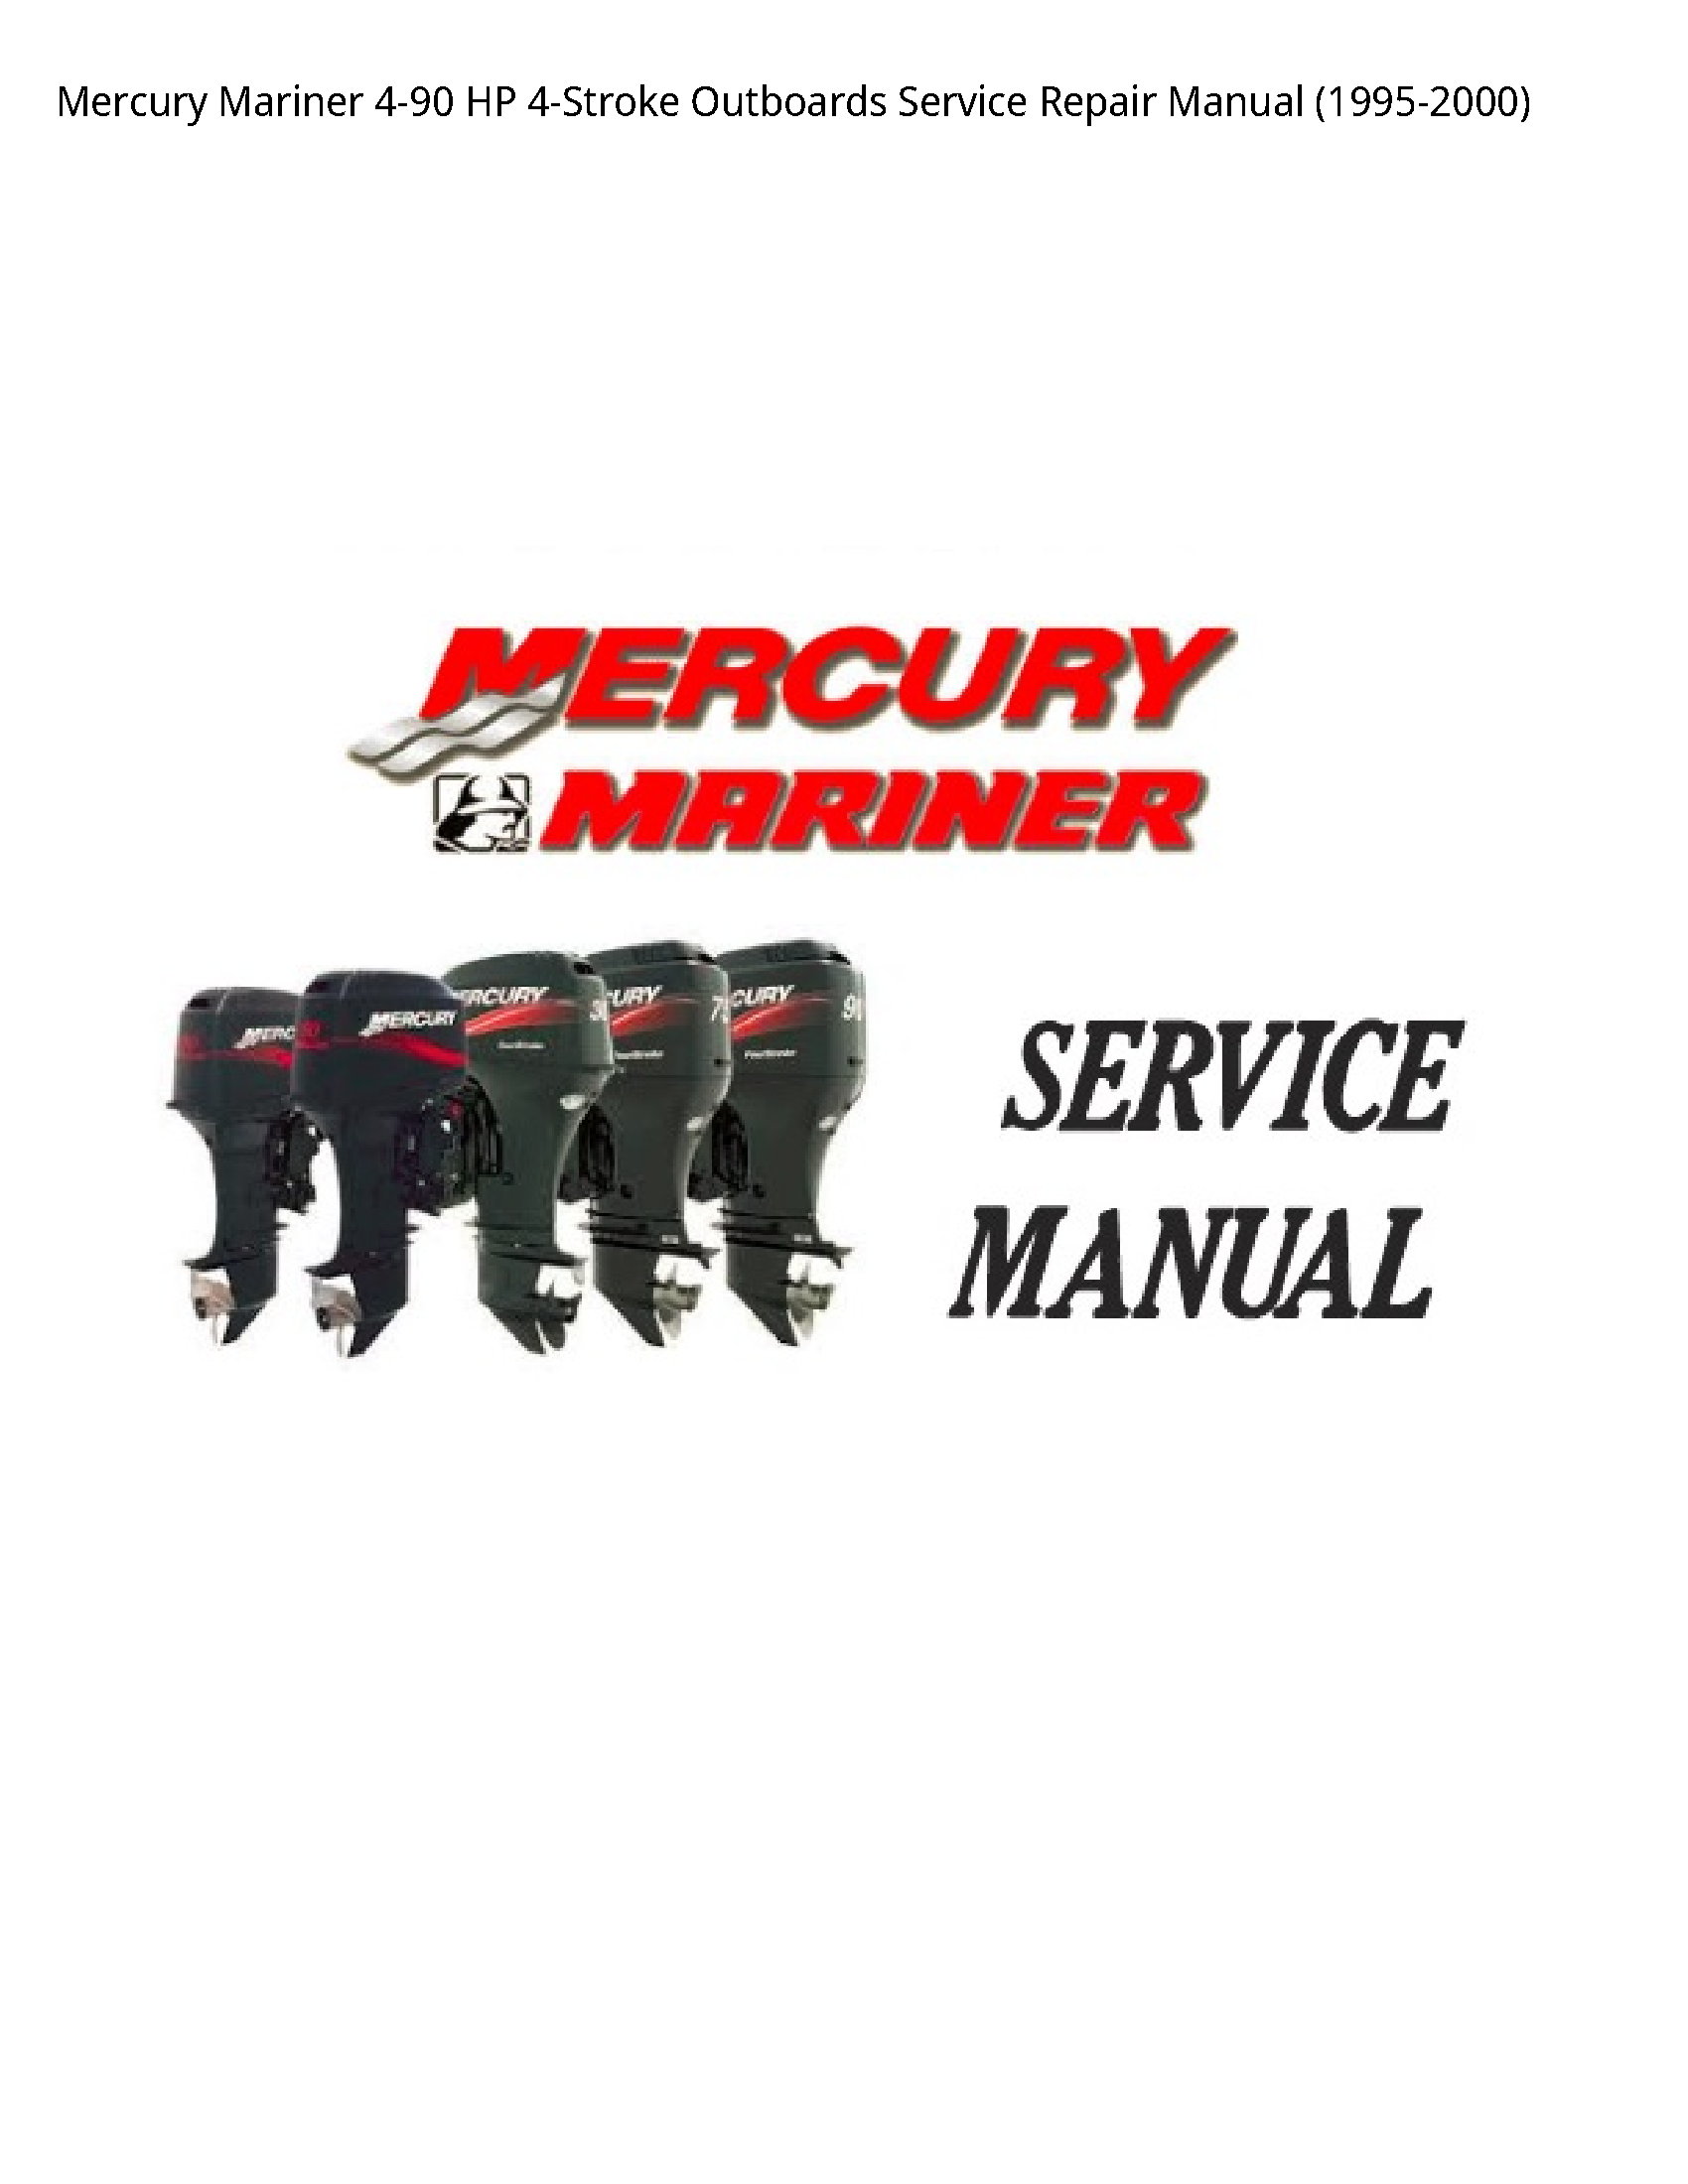 Mercury Mariner 4-90 HP Outboards manual